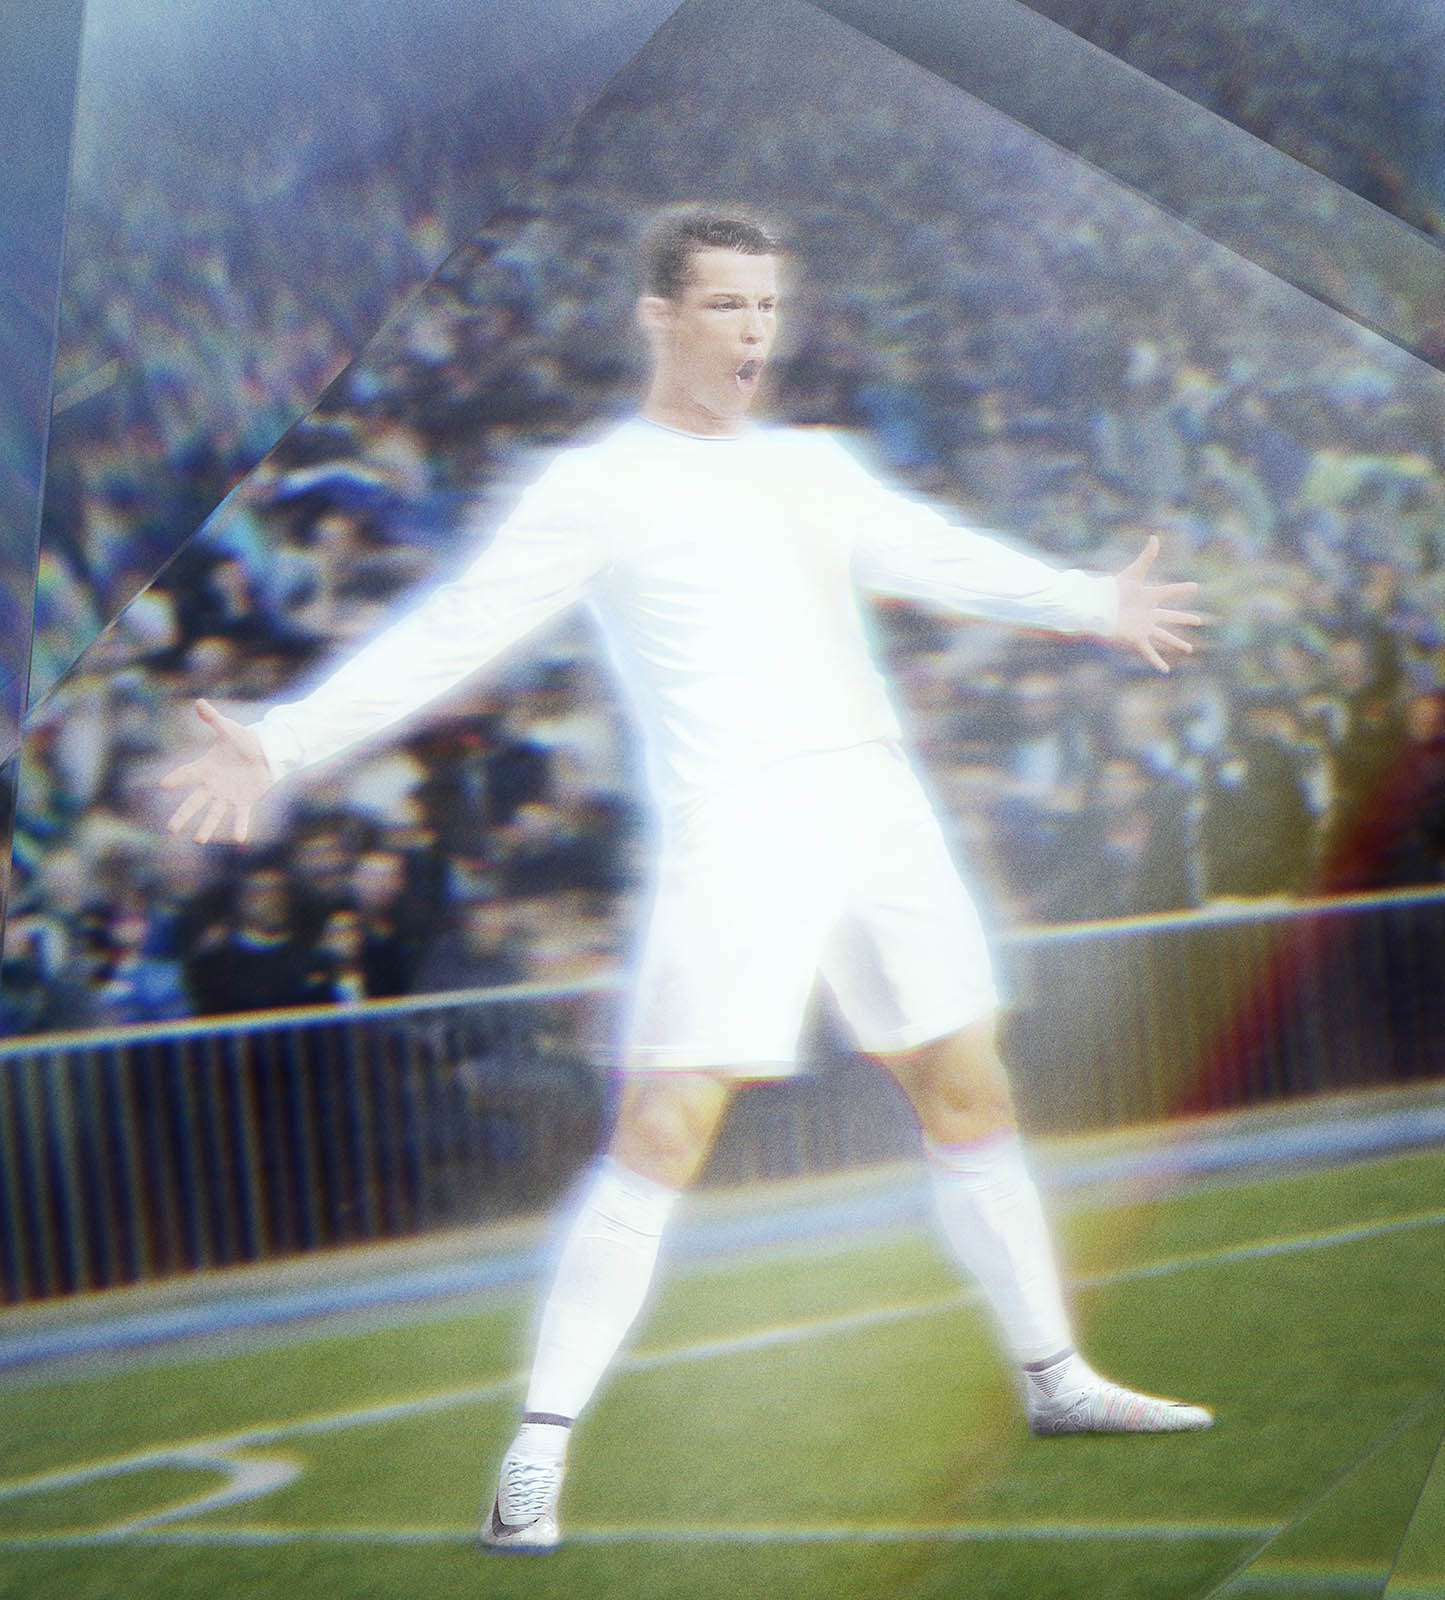 Mercurial Superfly V Cristiano Ronaldo Chapter 5 'Cut to Brilliance' - Footy Headlines